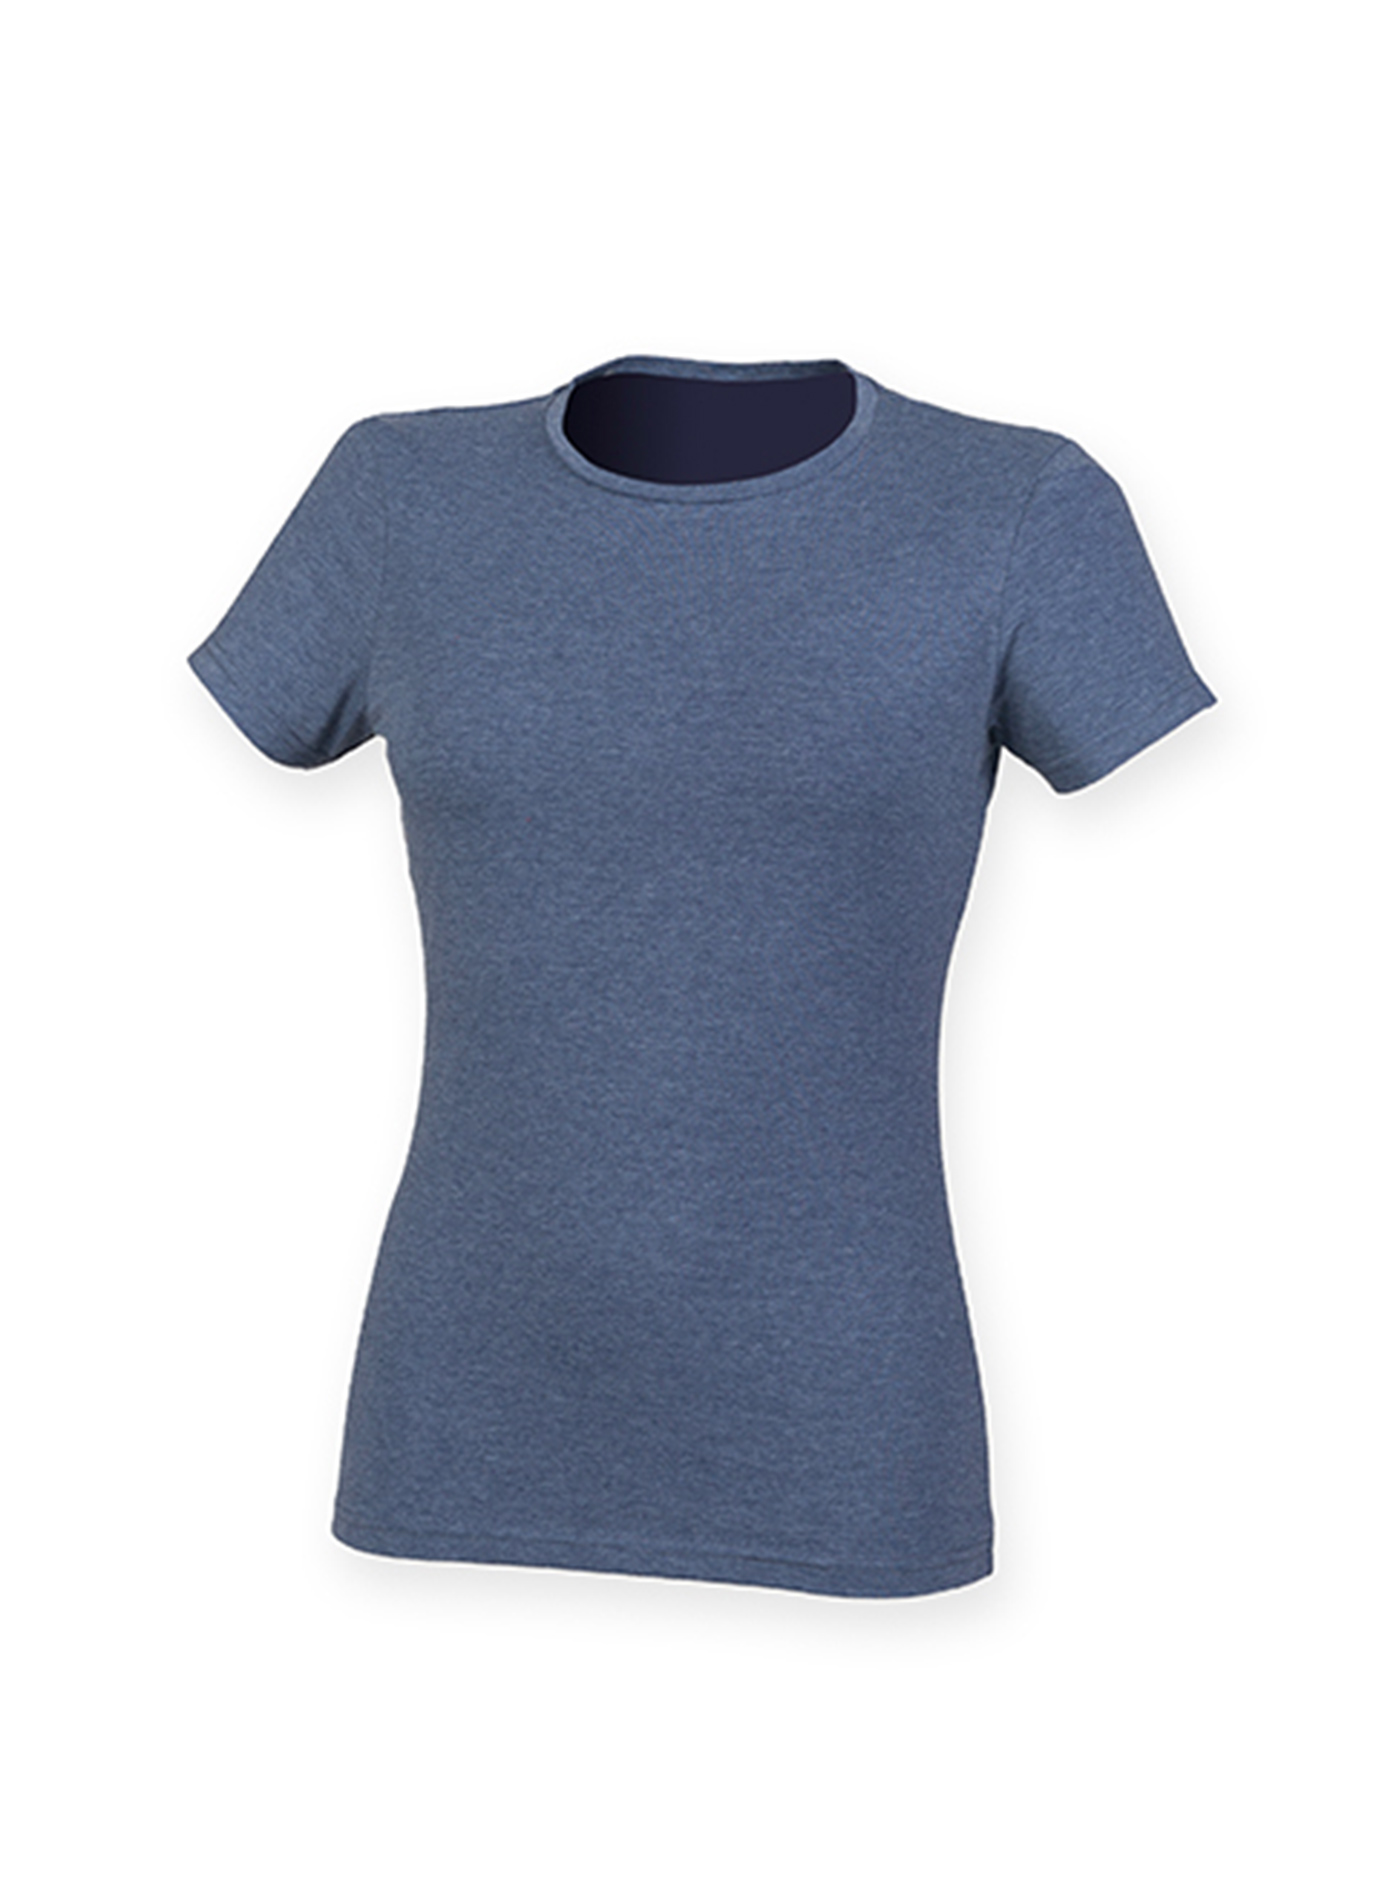 Dámské strečové tričko Skinnifit Feels Good - Tmavě modrá S